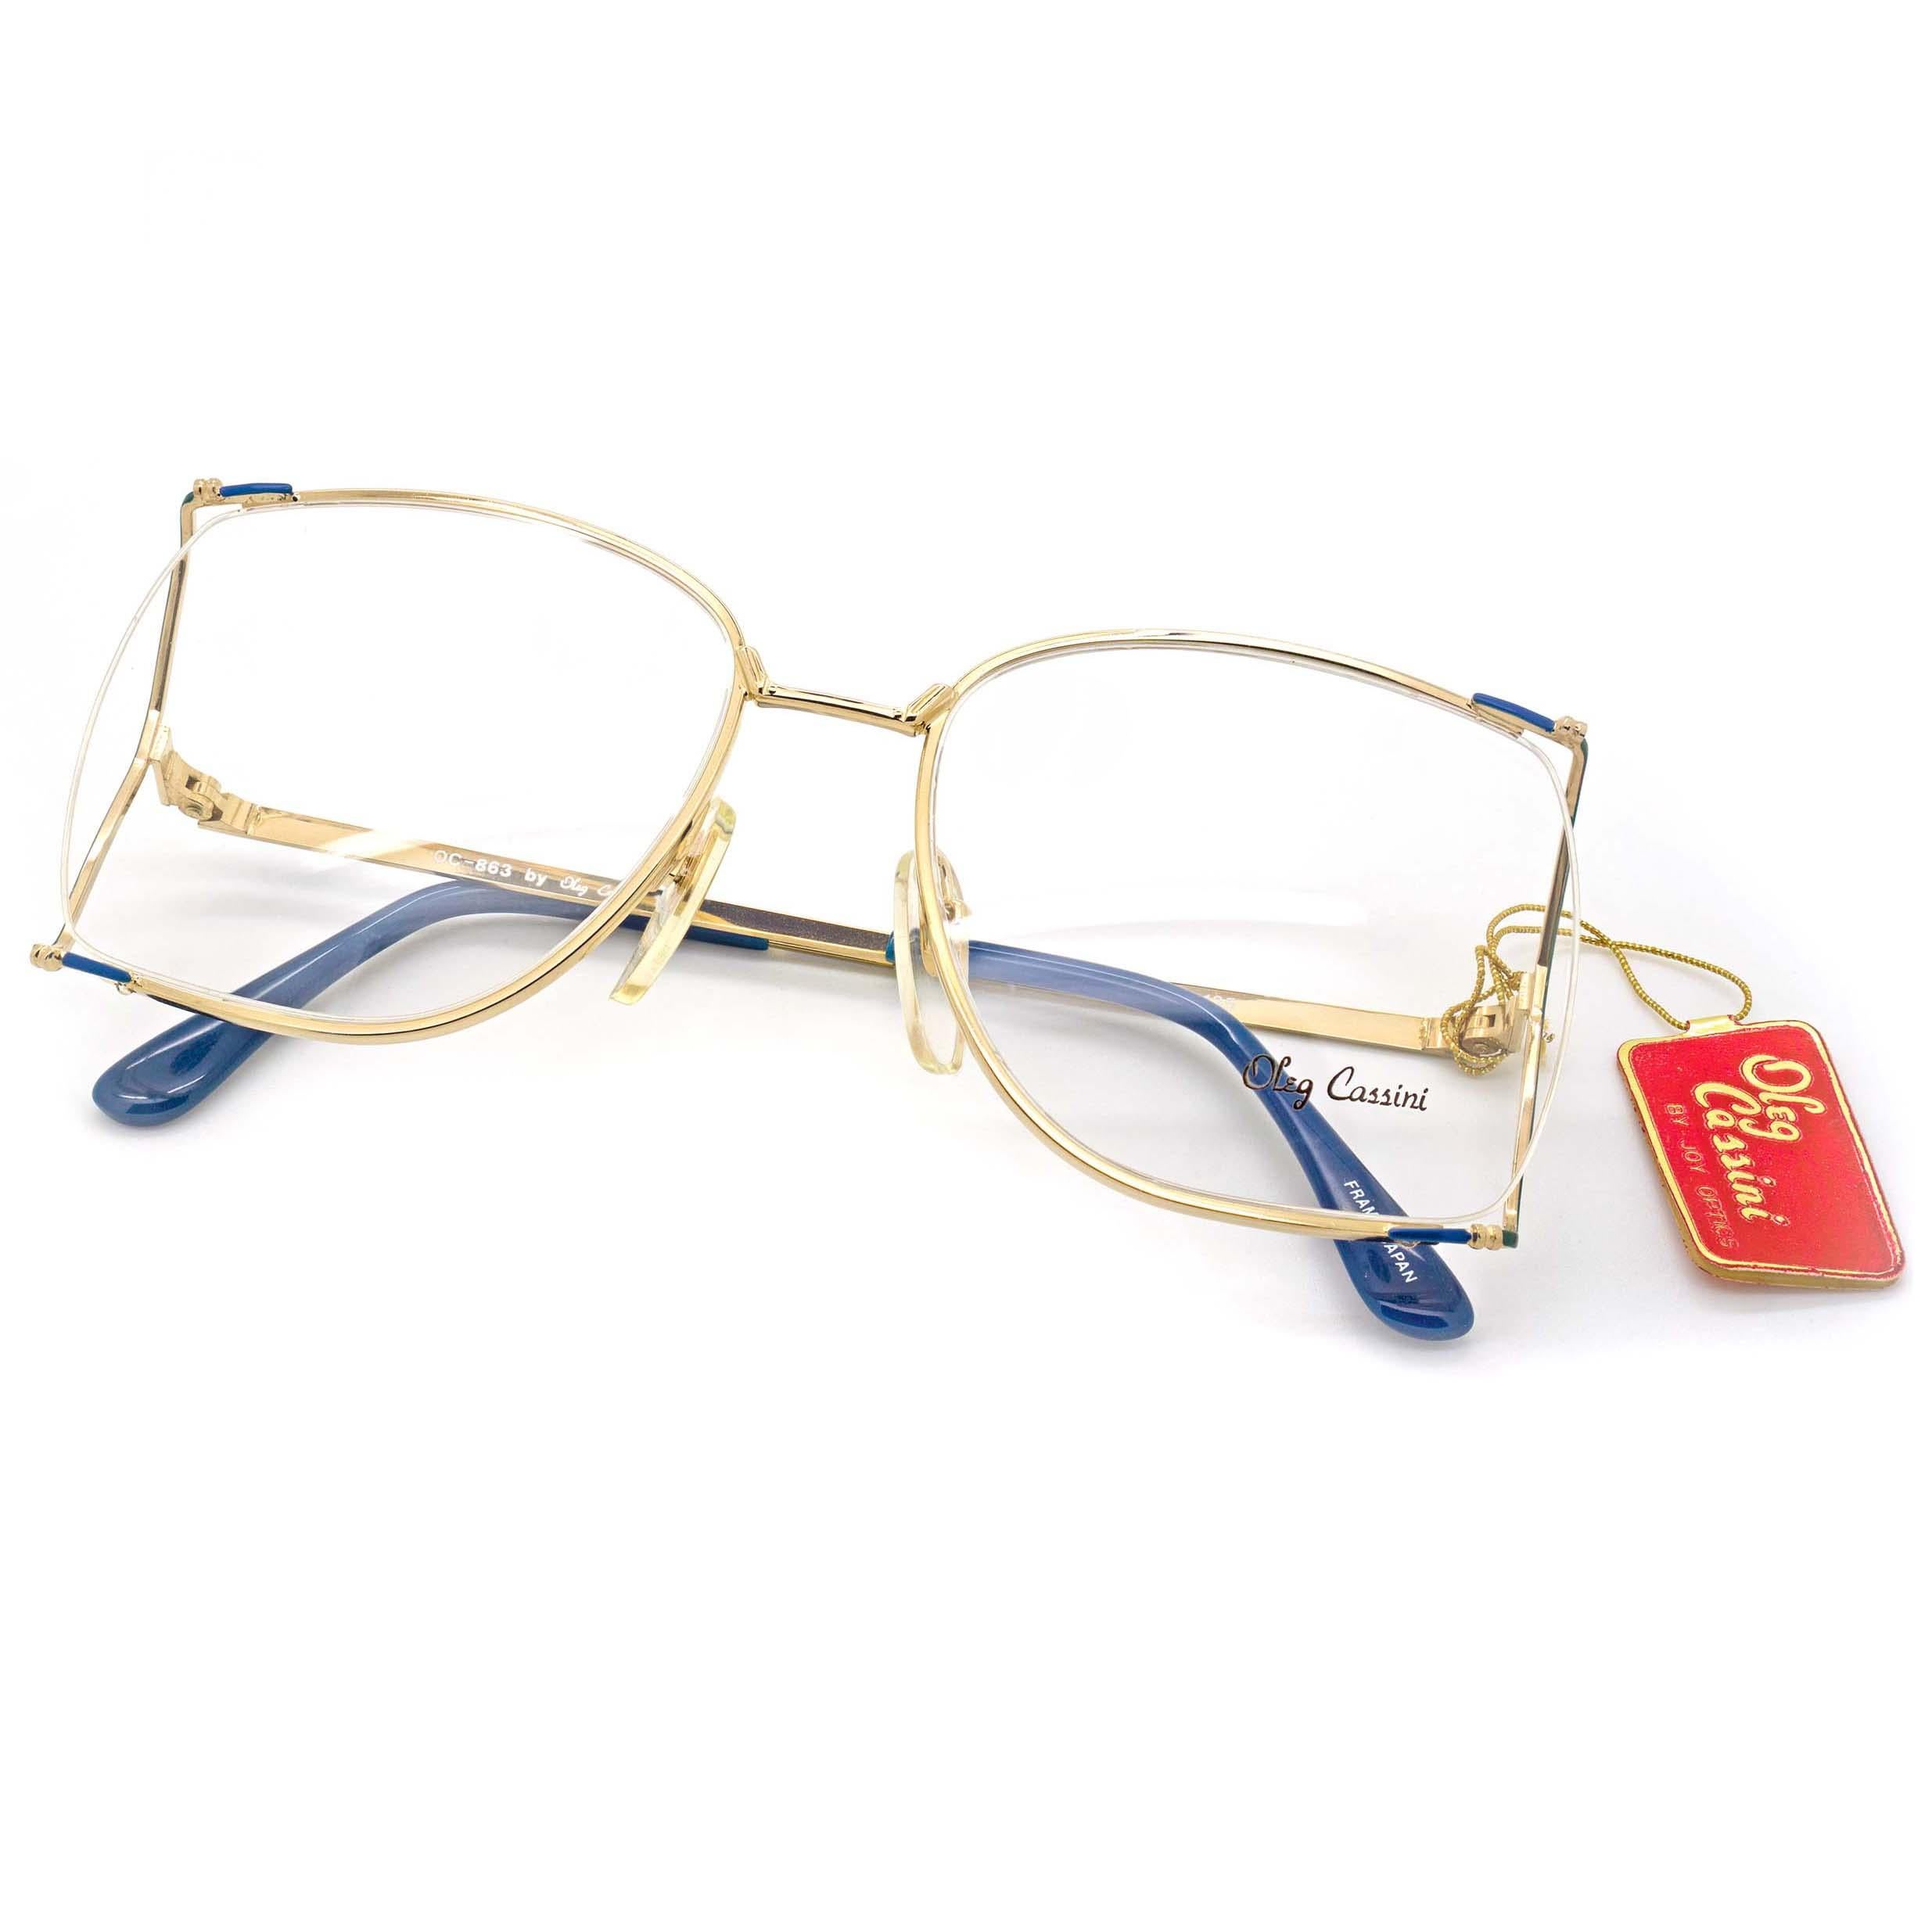 1970s eyeglasses